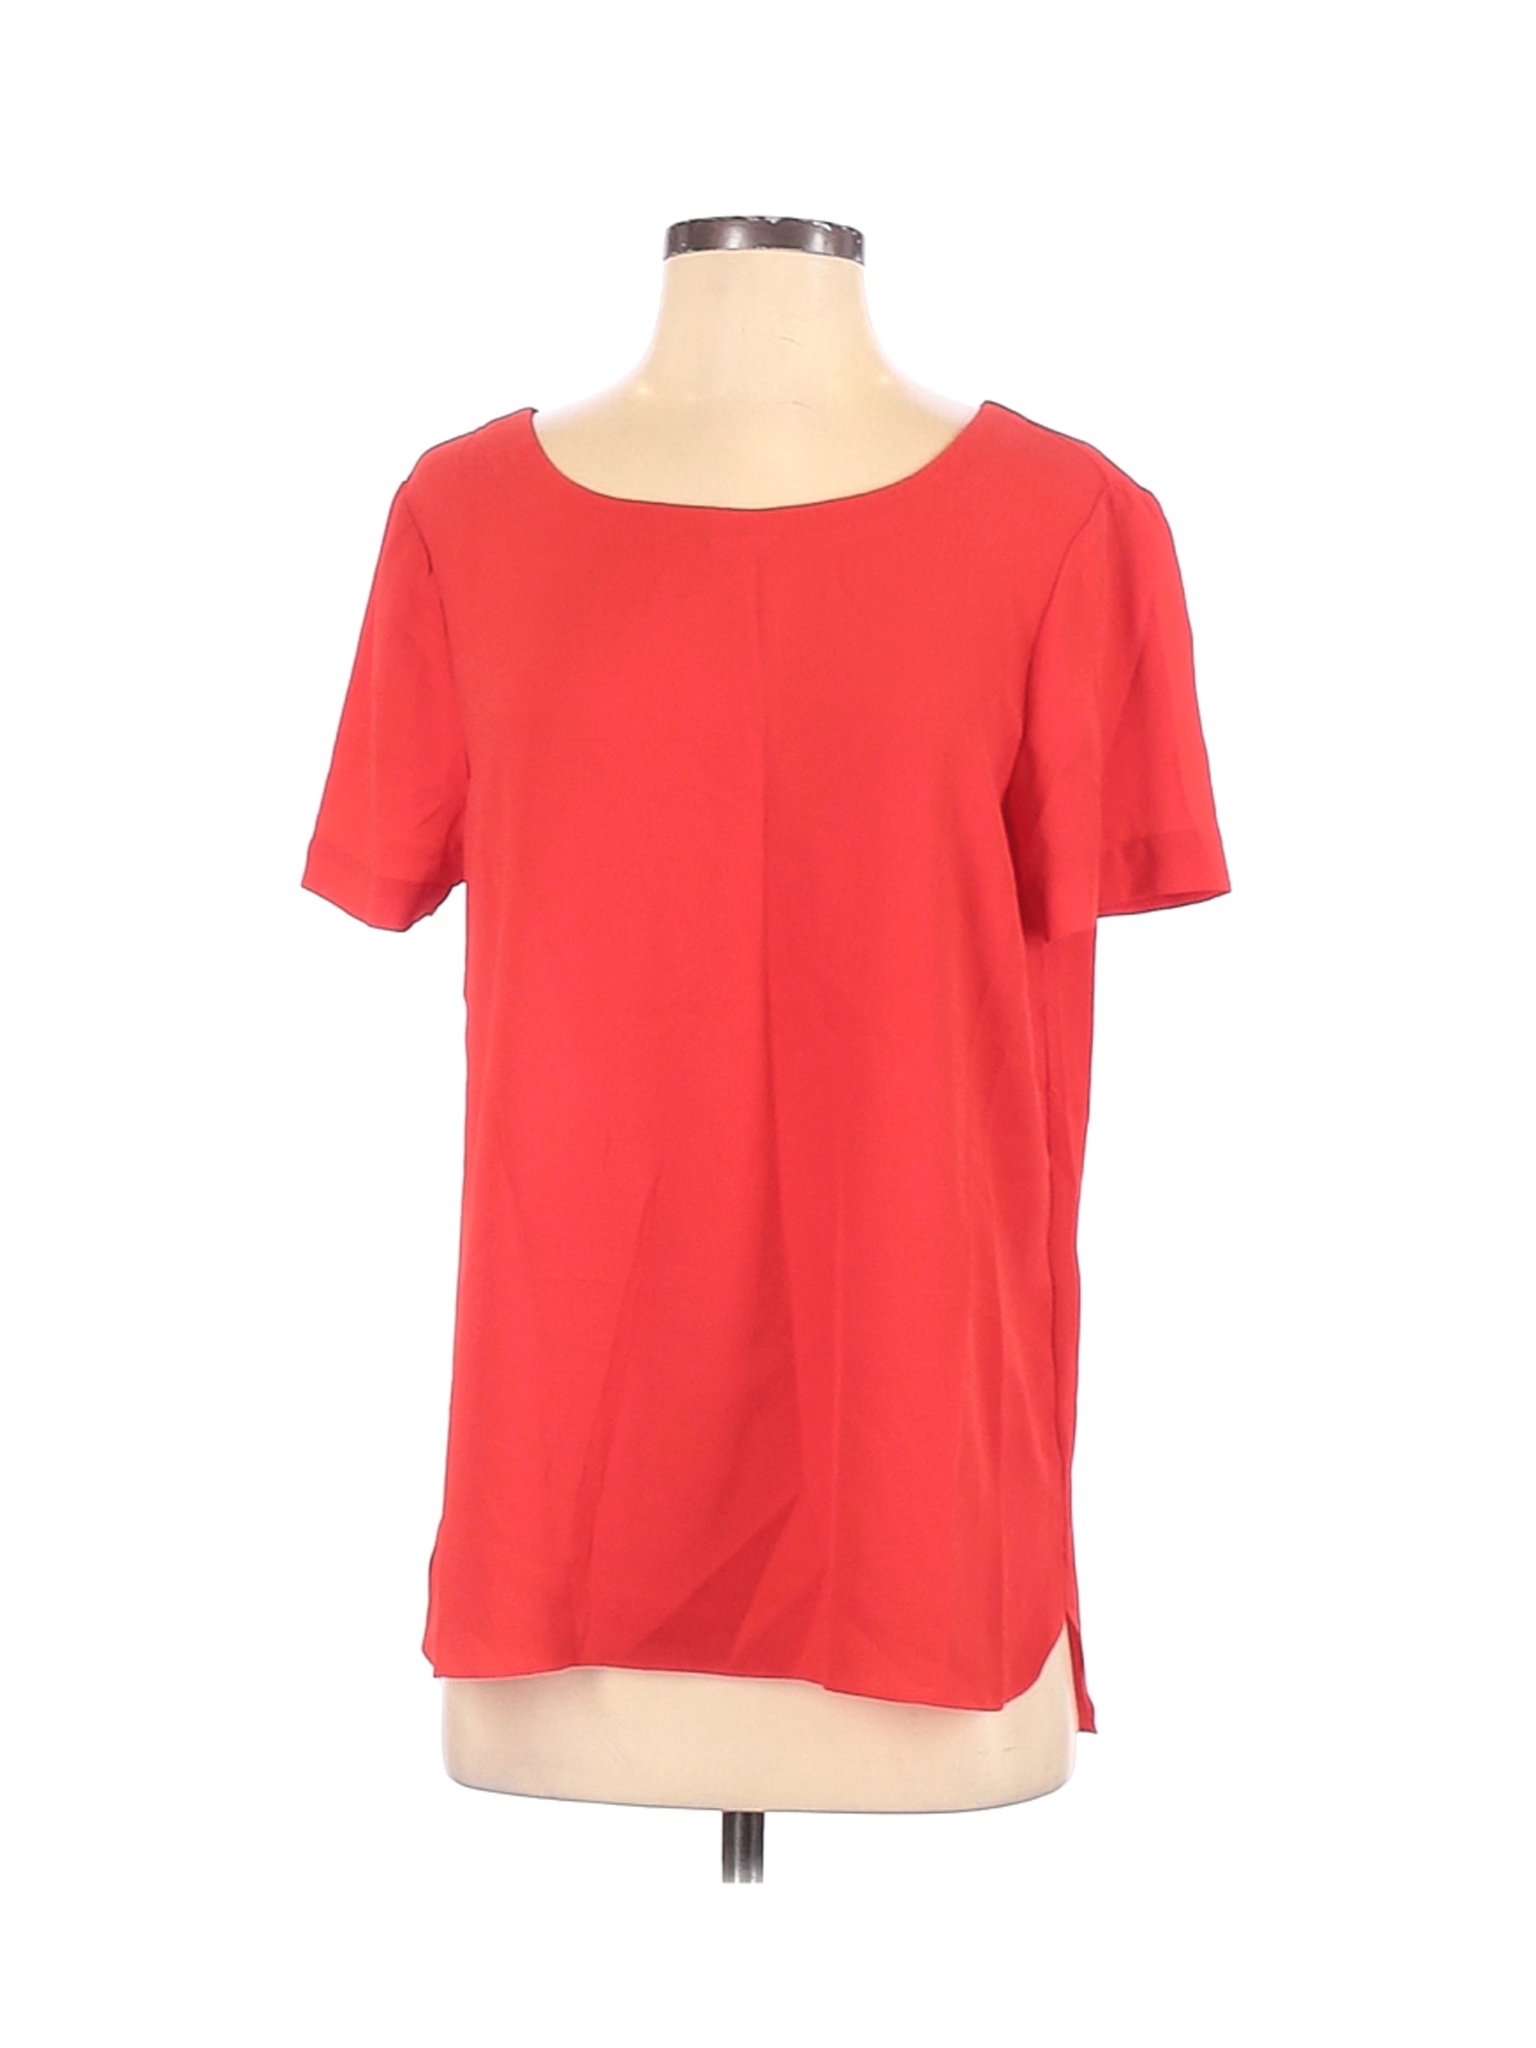 Adrienne Vittadini Women Pink Short Sleeve Blouse S | eBay